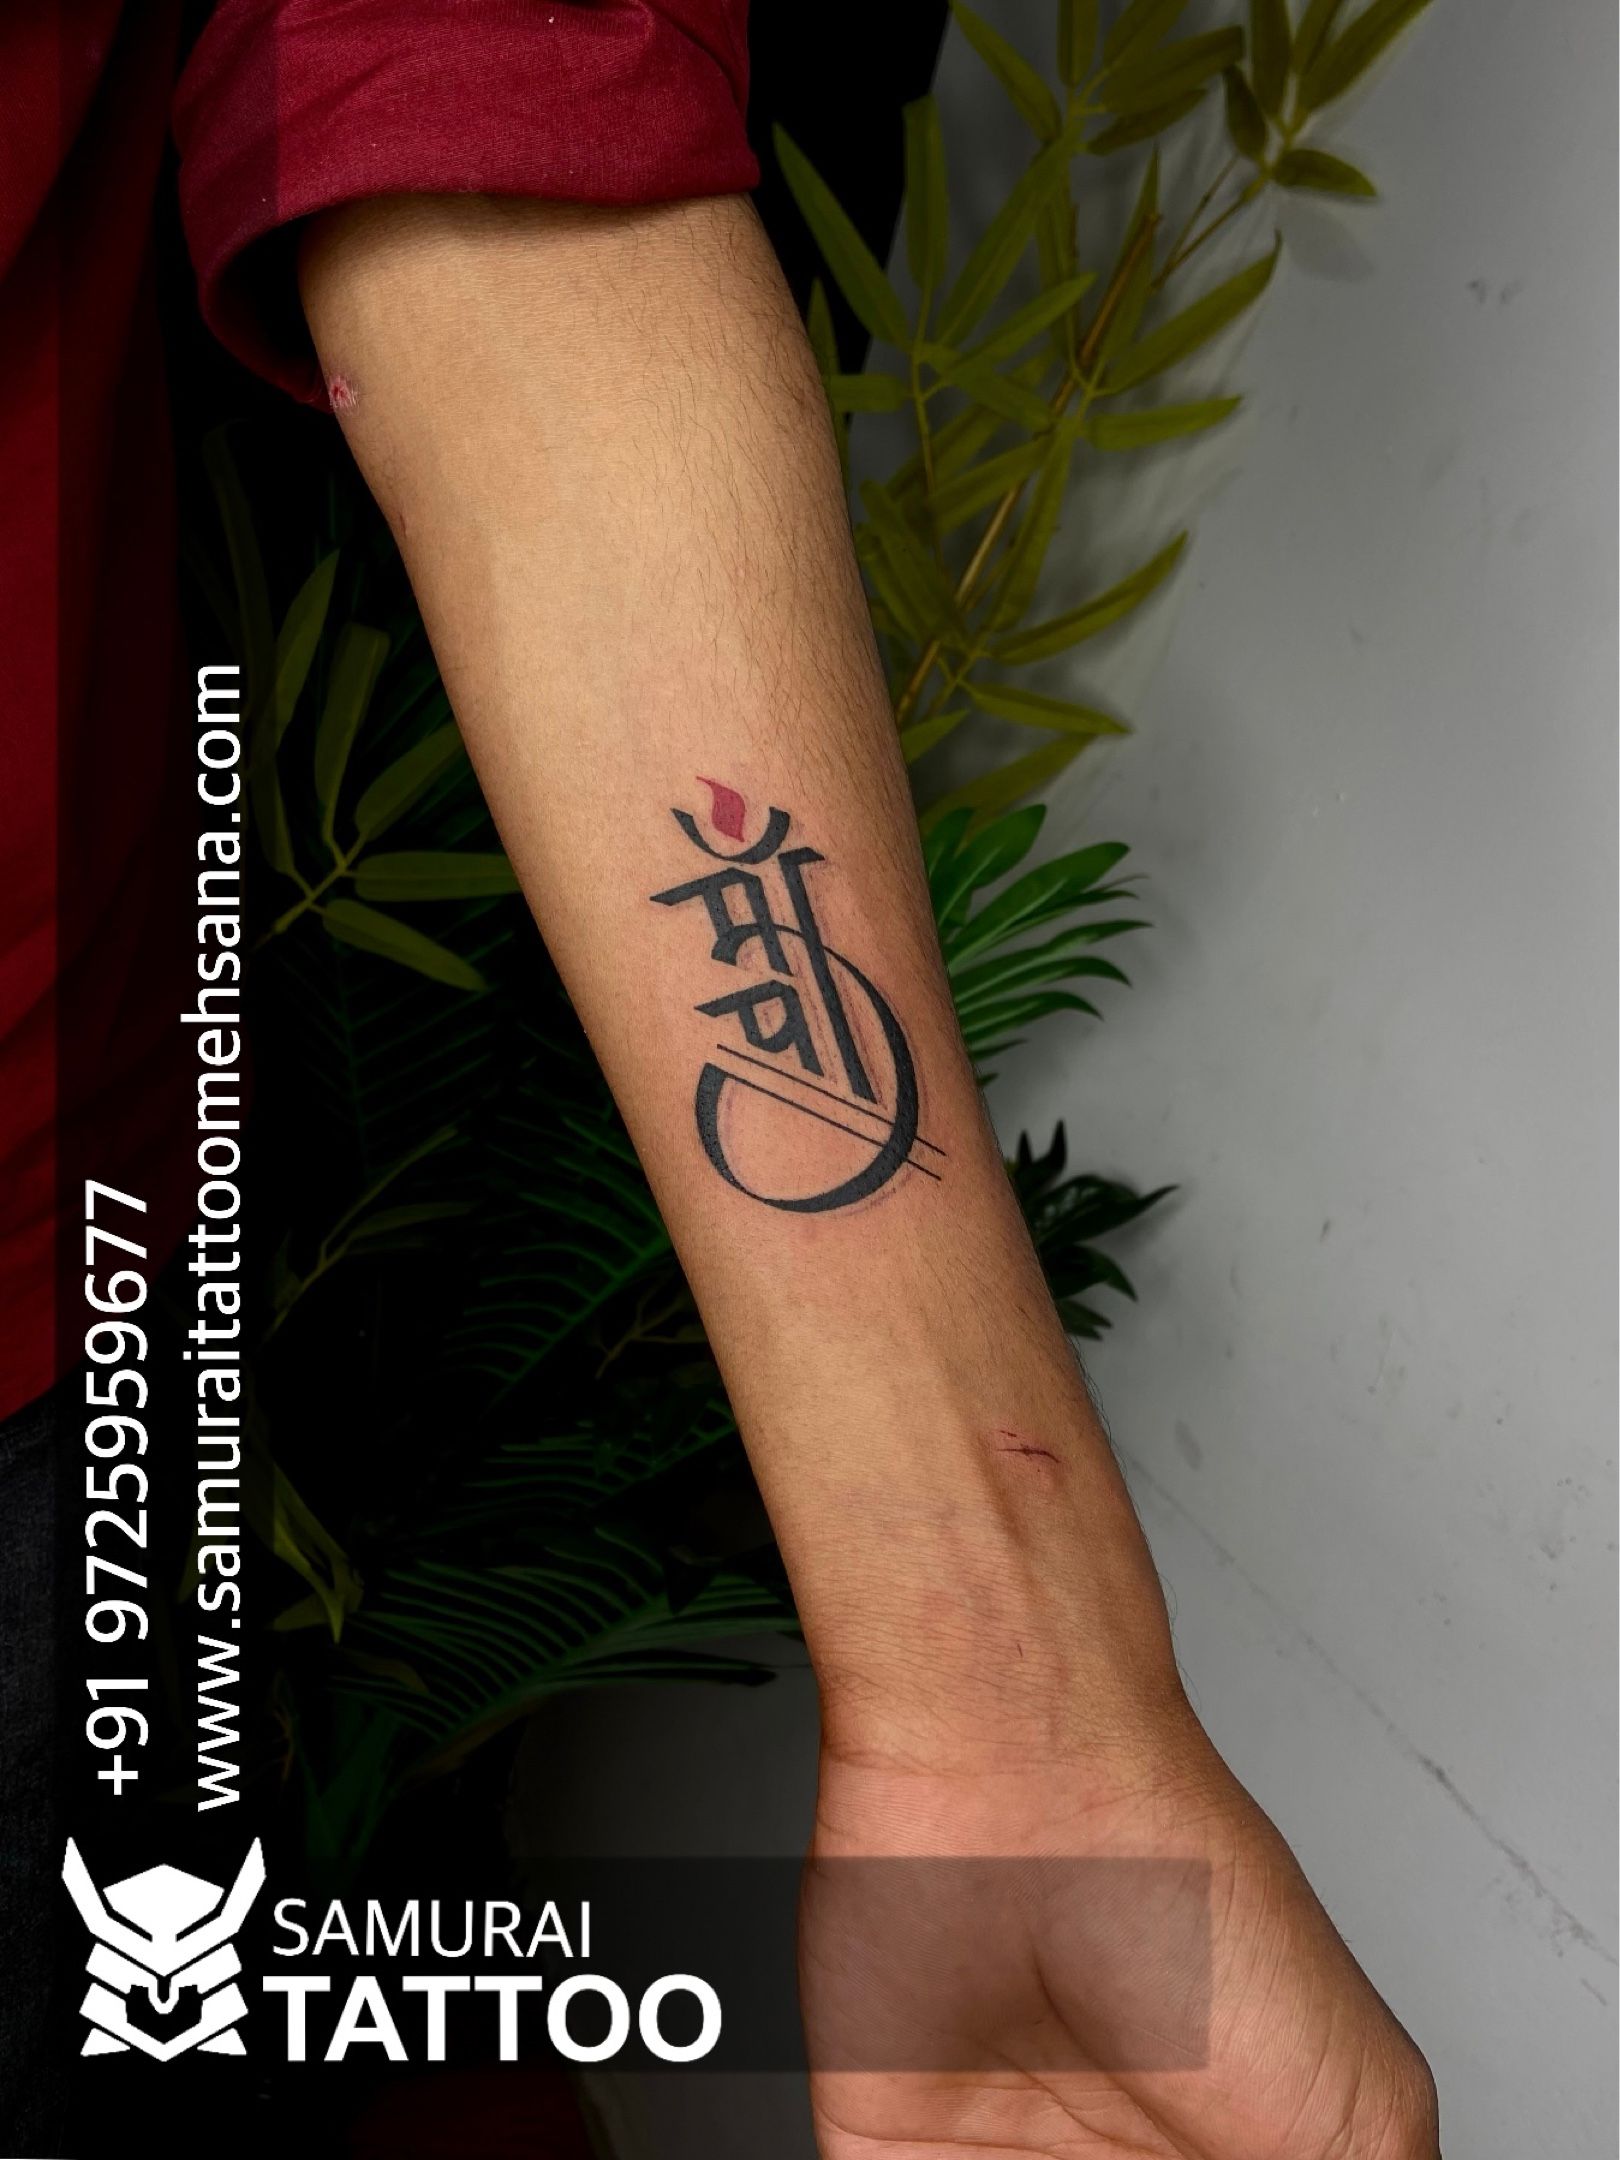 Ganesh P Tattooist on Twitter maapaa maapaatattoo maa paa omtattoo  om heart tattoo design by Ganesh Panchal Tattooist work tattoo  momdadlove nandedcity maharashtra pune mumbai india ganeshptattooist  2021 address shop no 36 